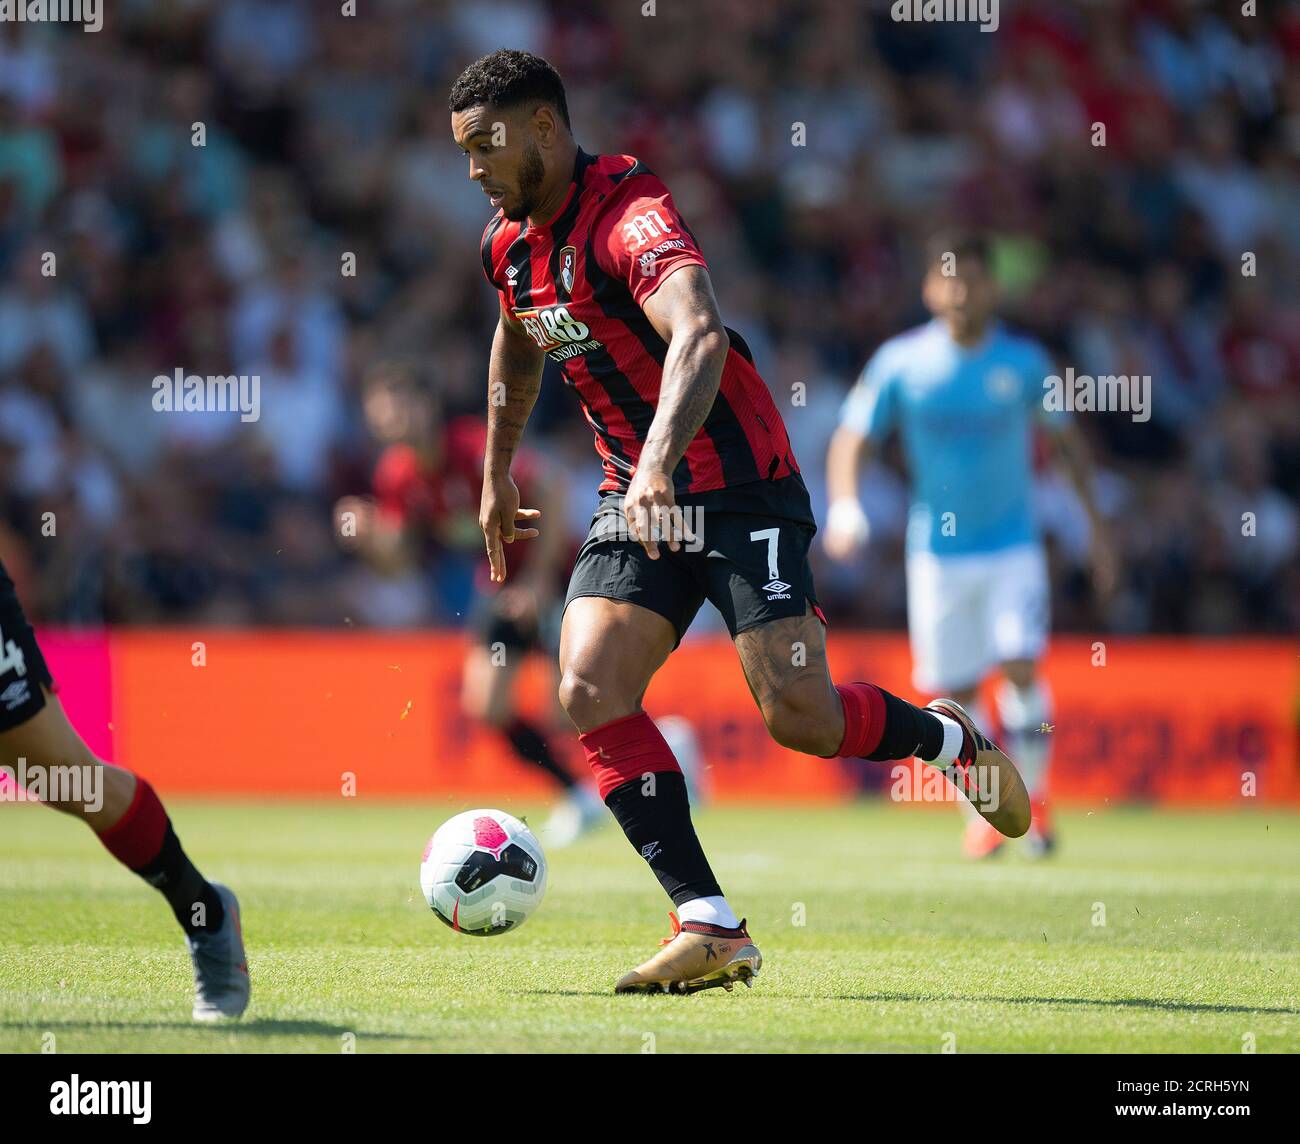 AFC Bournemouth's Joshua King  PHOTO CREDIT : © MARK PAIN / ALAMY STOCK PHOTO Stock Photo